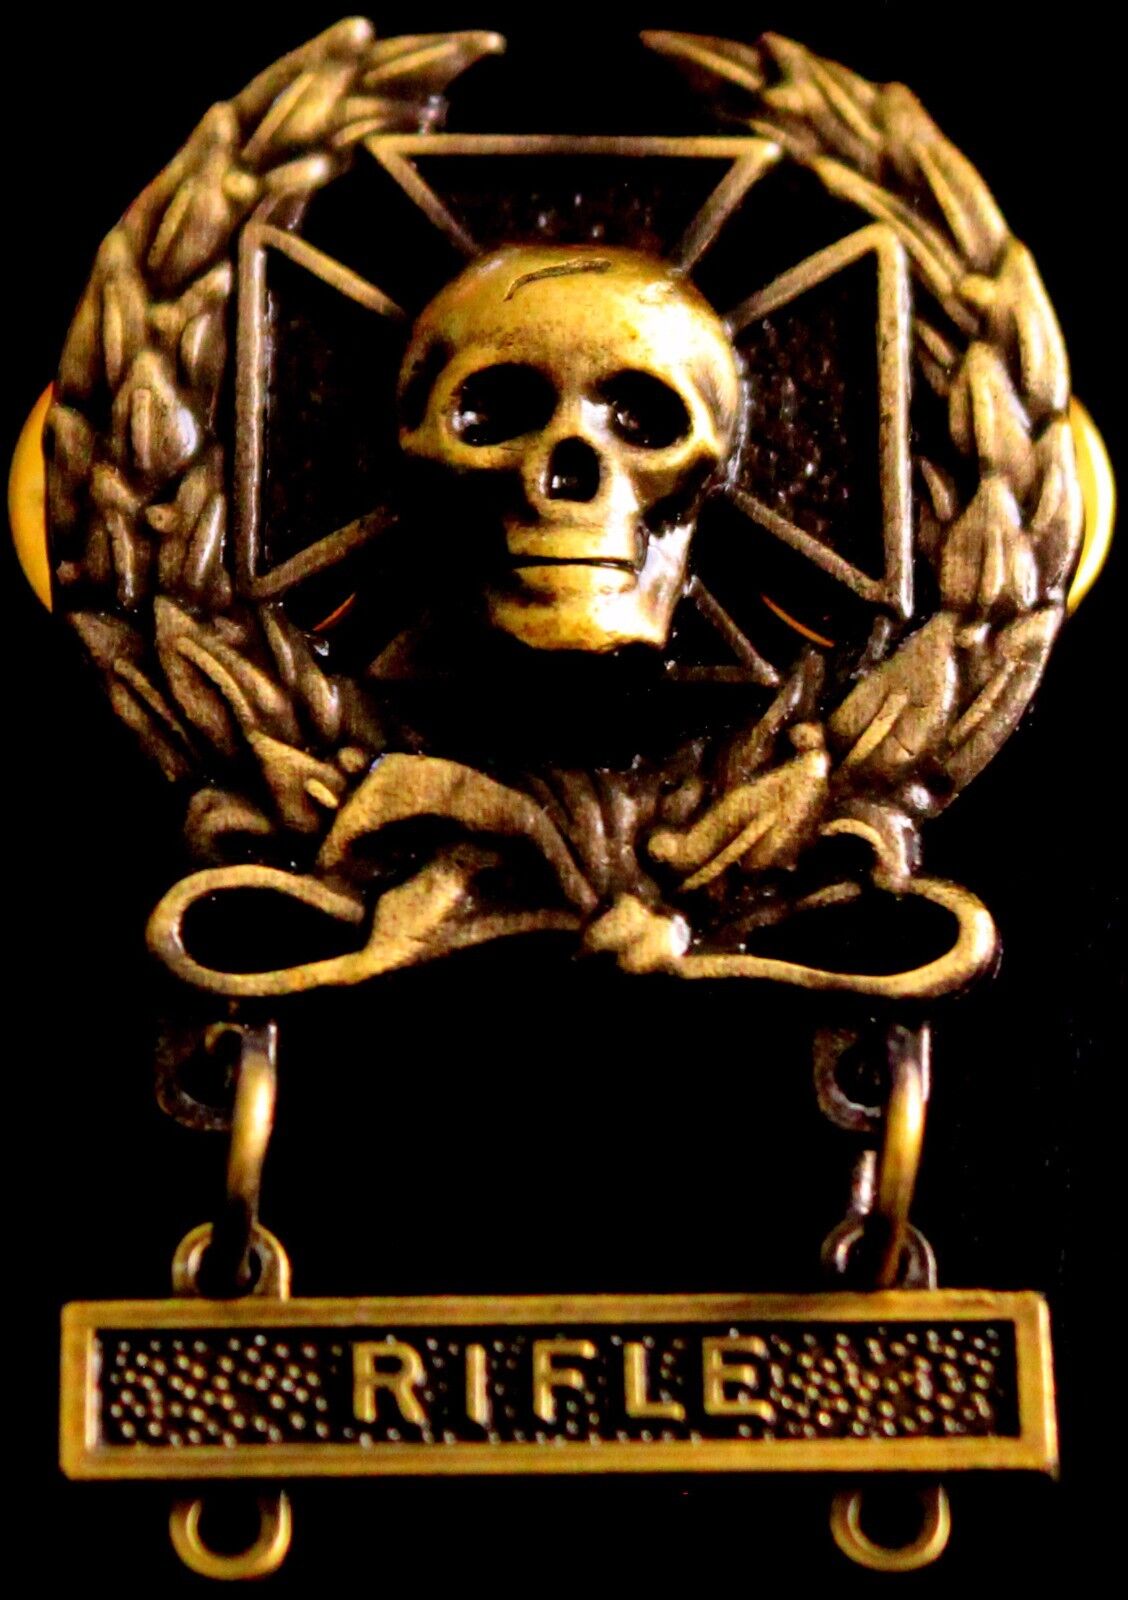 Expert Sniper Skull Badge Pin Rifle Bar Army Marksman M24 Medal ANTIQUE Insignia